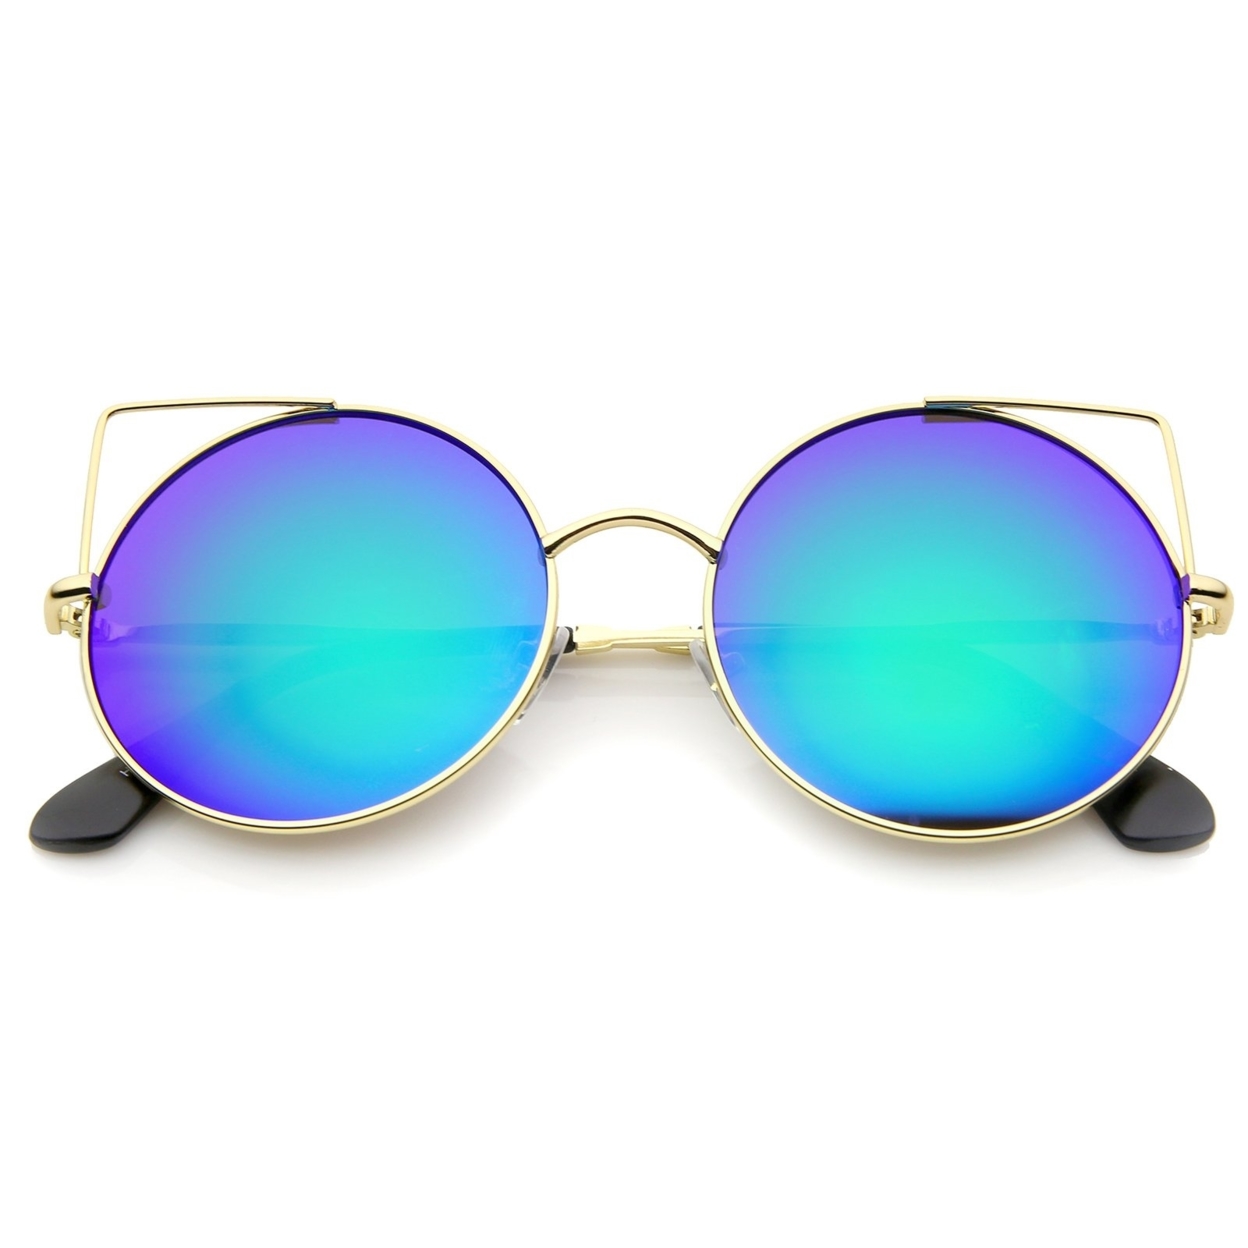 Women's Full Metal Cut Out Mirror Flat Lens Round Cat Eye Sunglasses 55mm - Gold / Blue Mirror